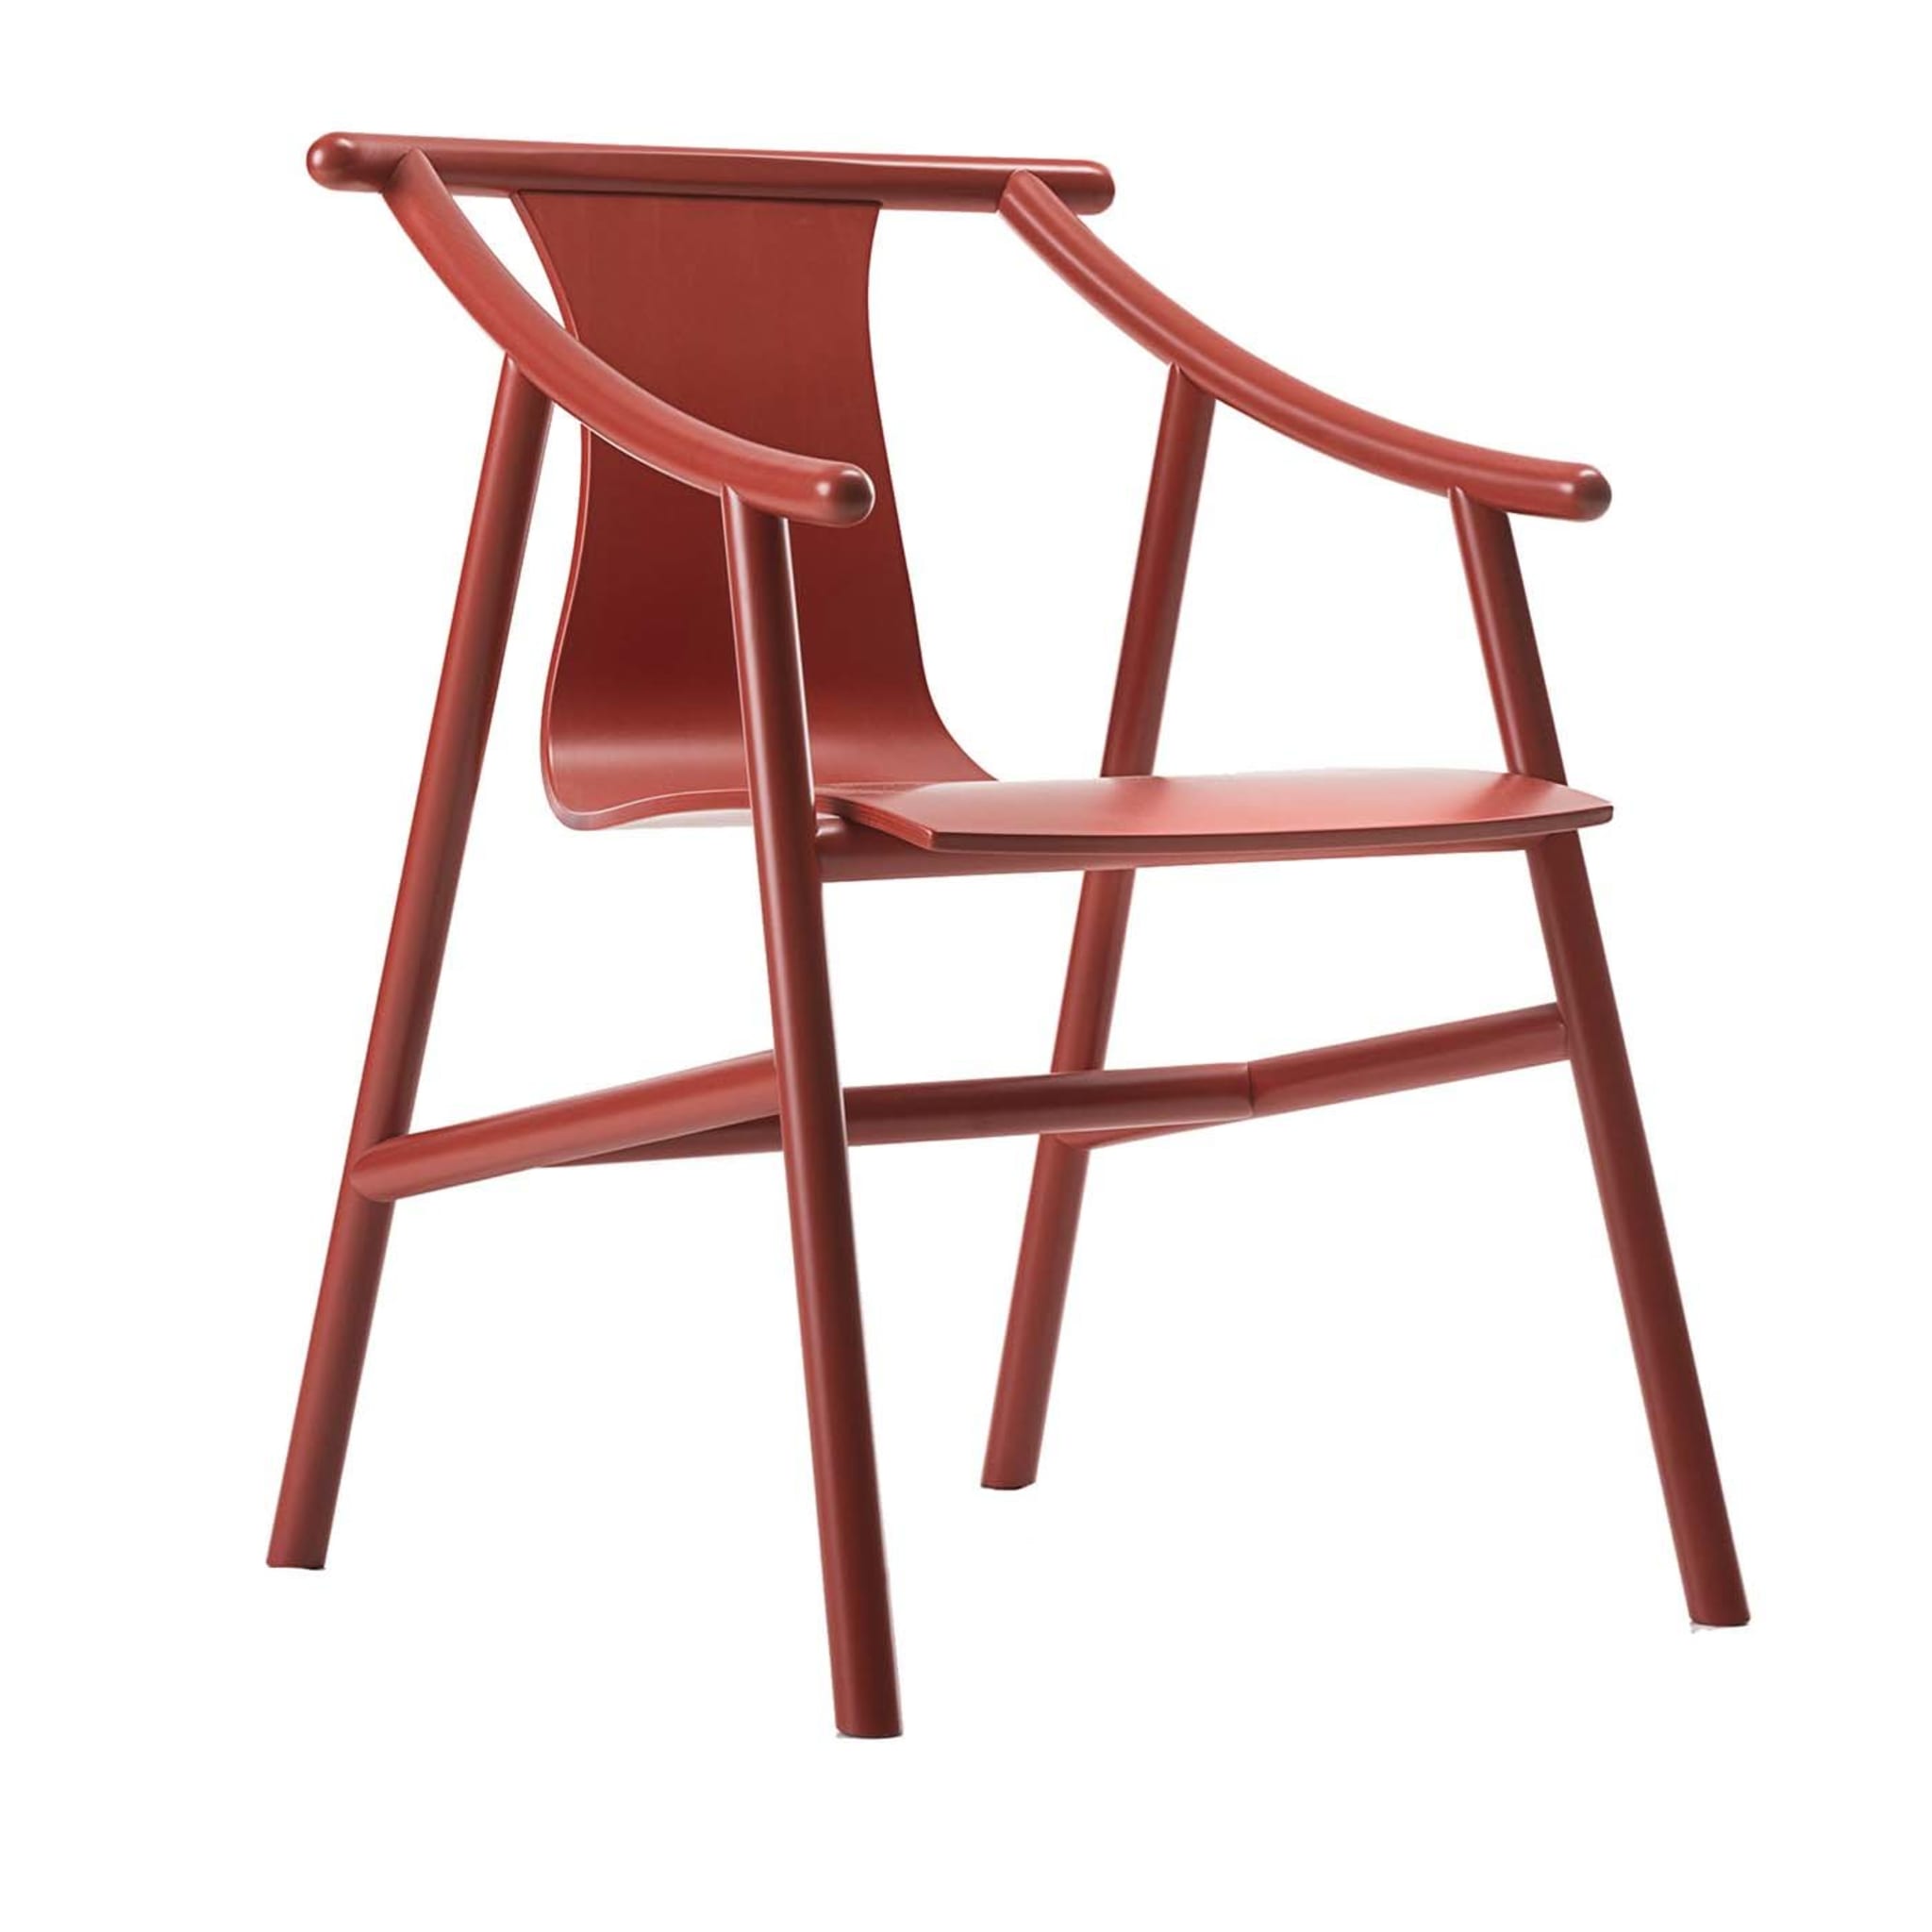 Magistretti 03 01 Red Chair by Vico Magistretti - Main view